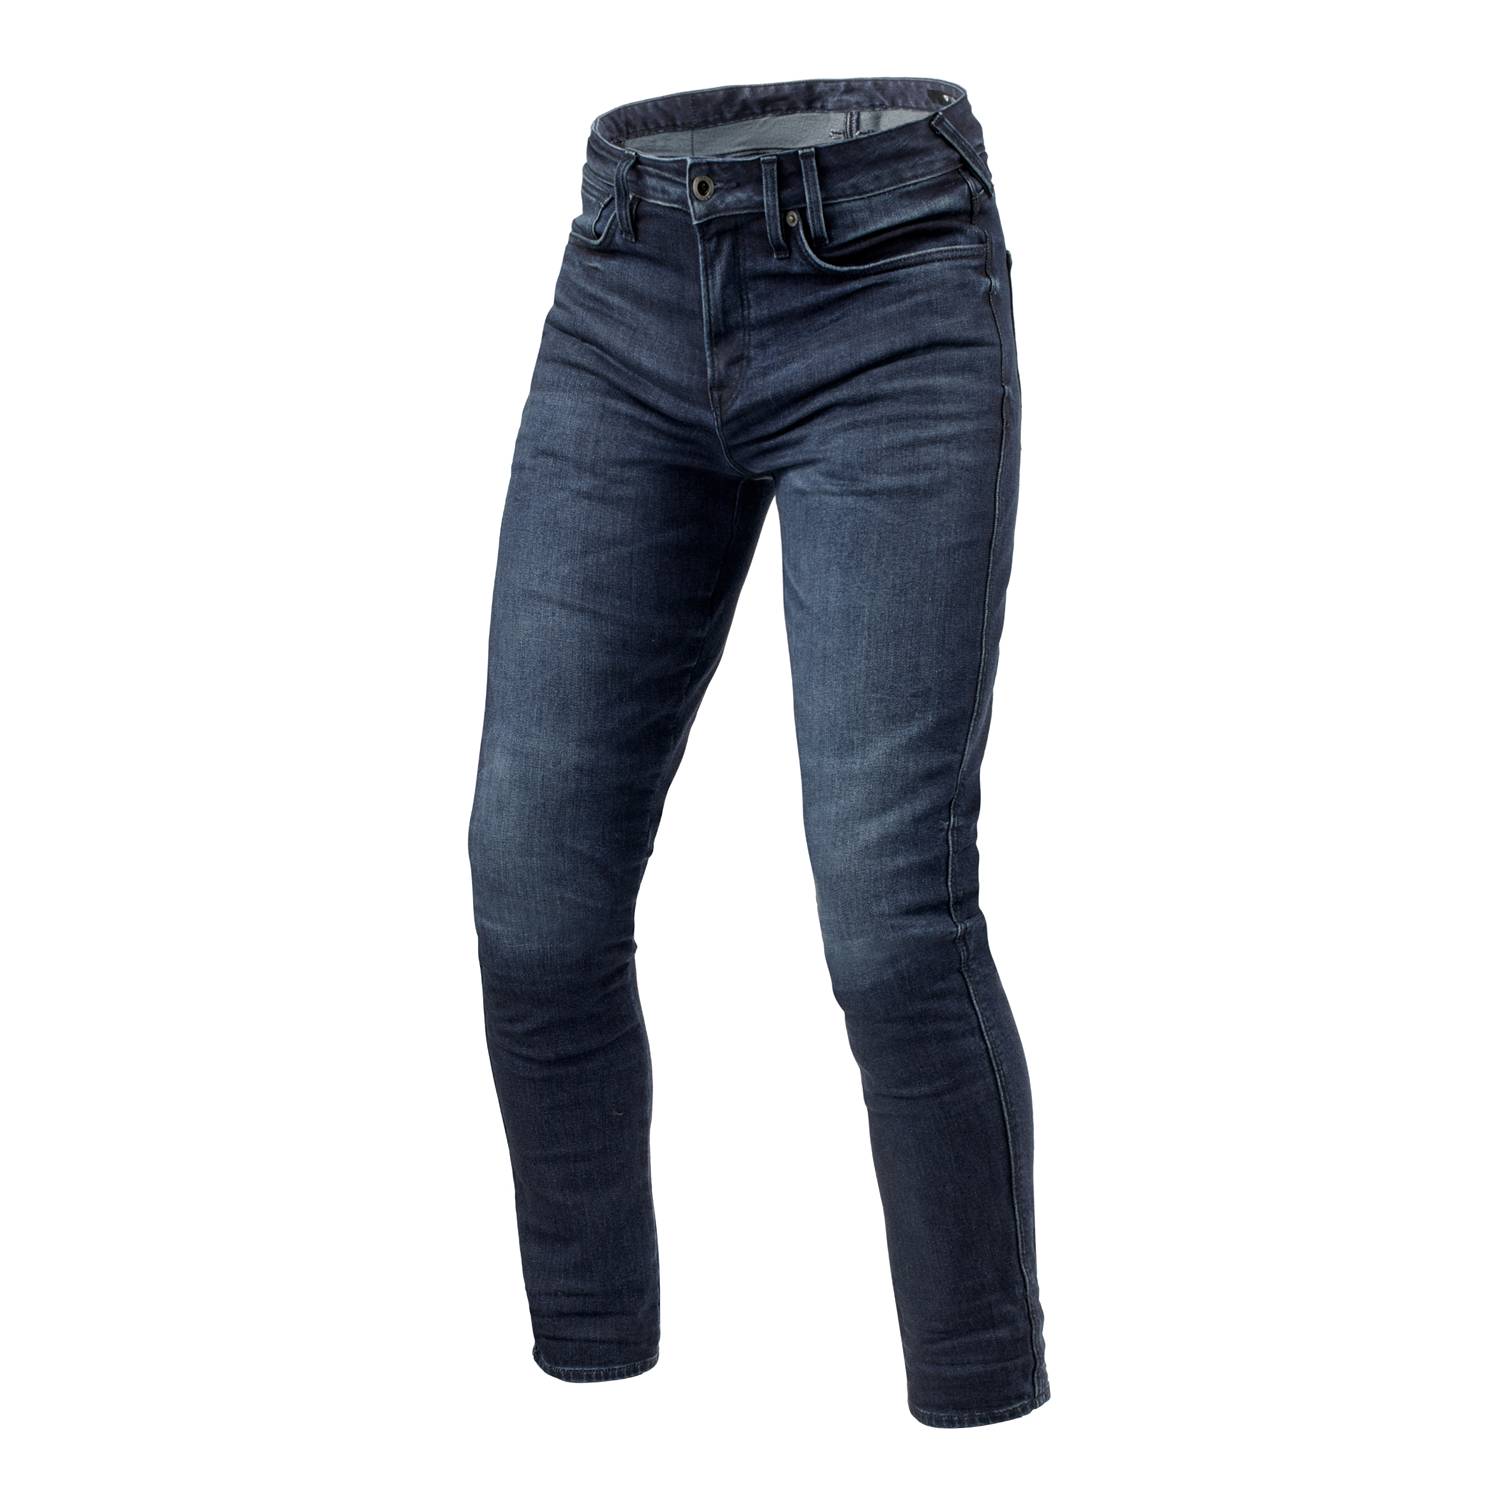 Image of REV'IT! Jeans Carlin SK Dark Blue Used L32 Motorcycle Jeans Talla L32/W34